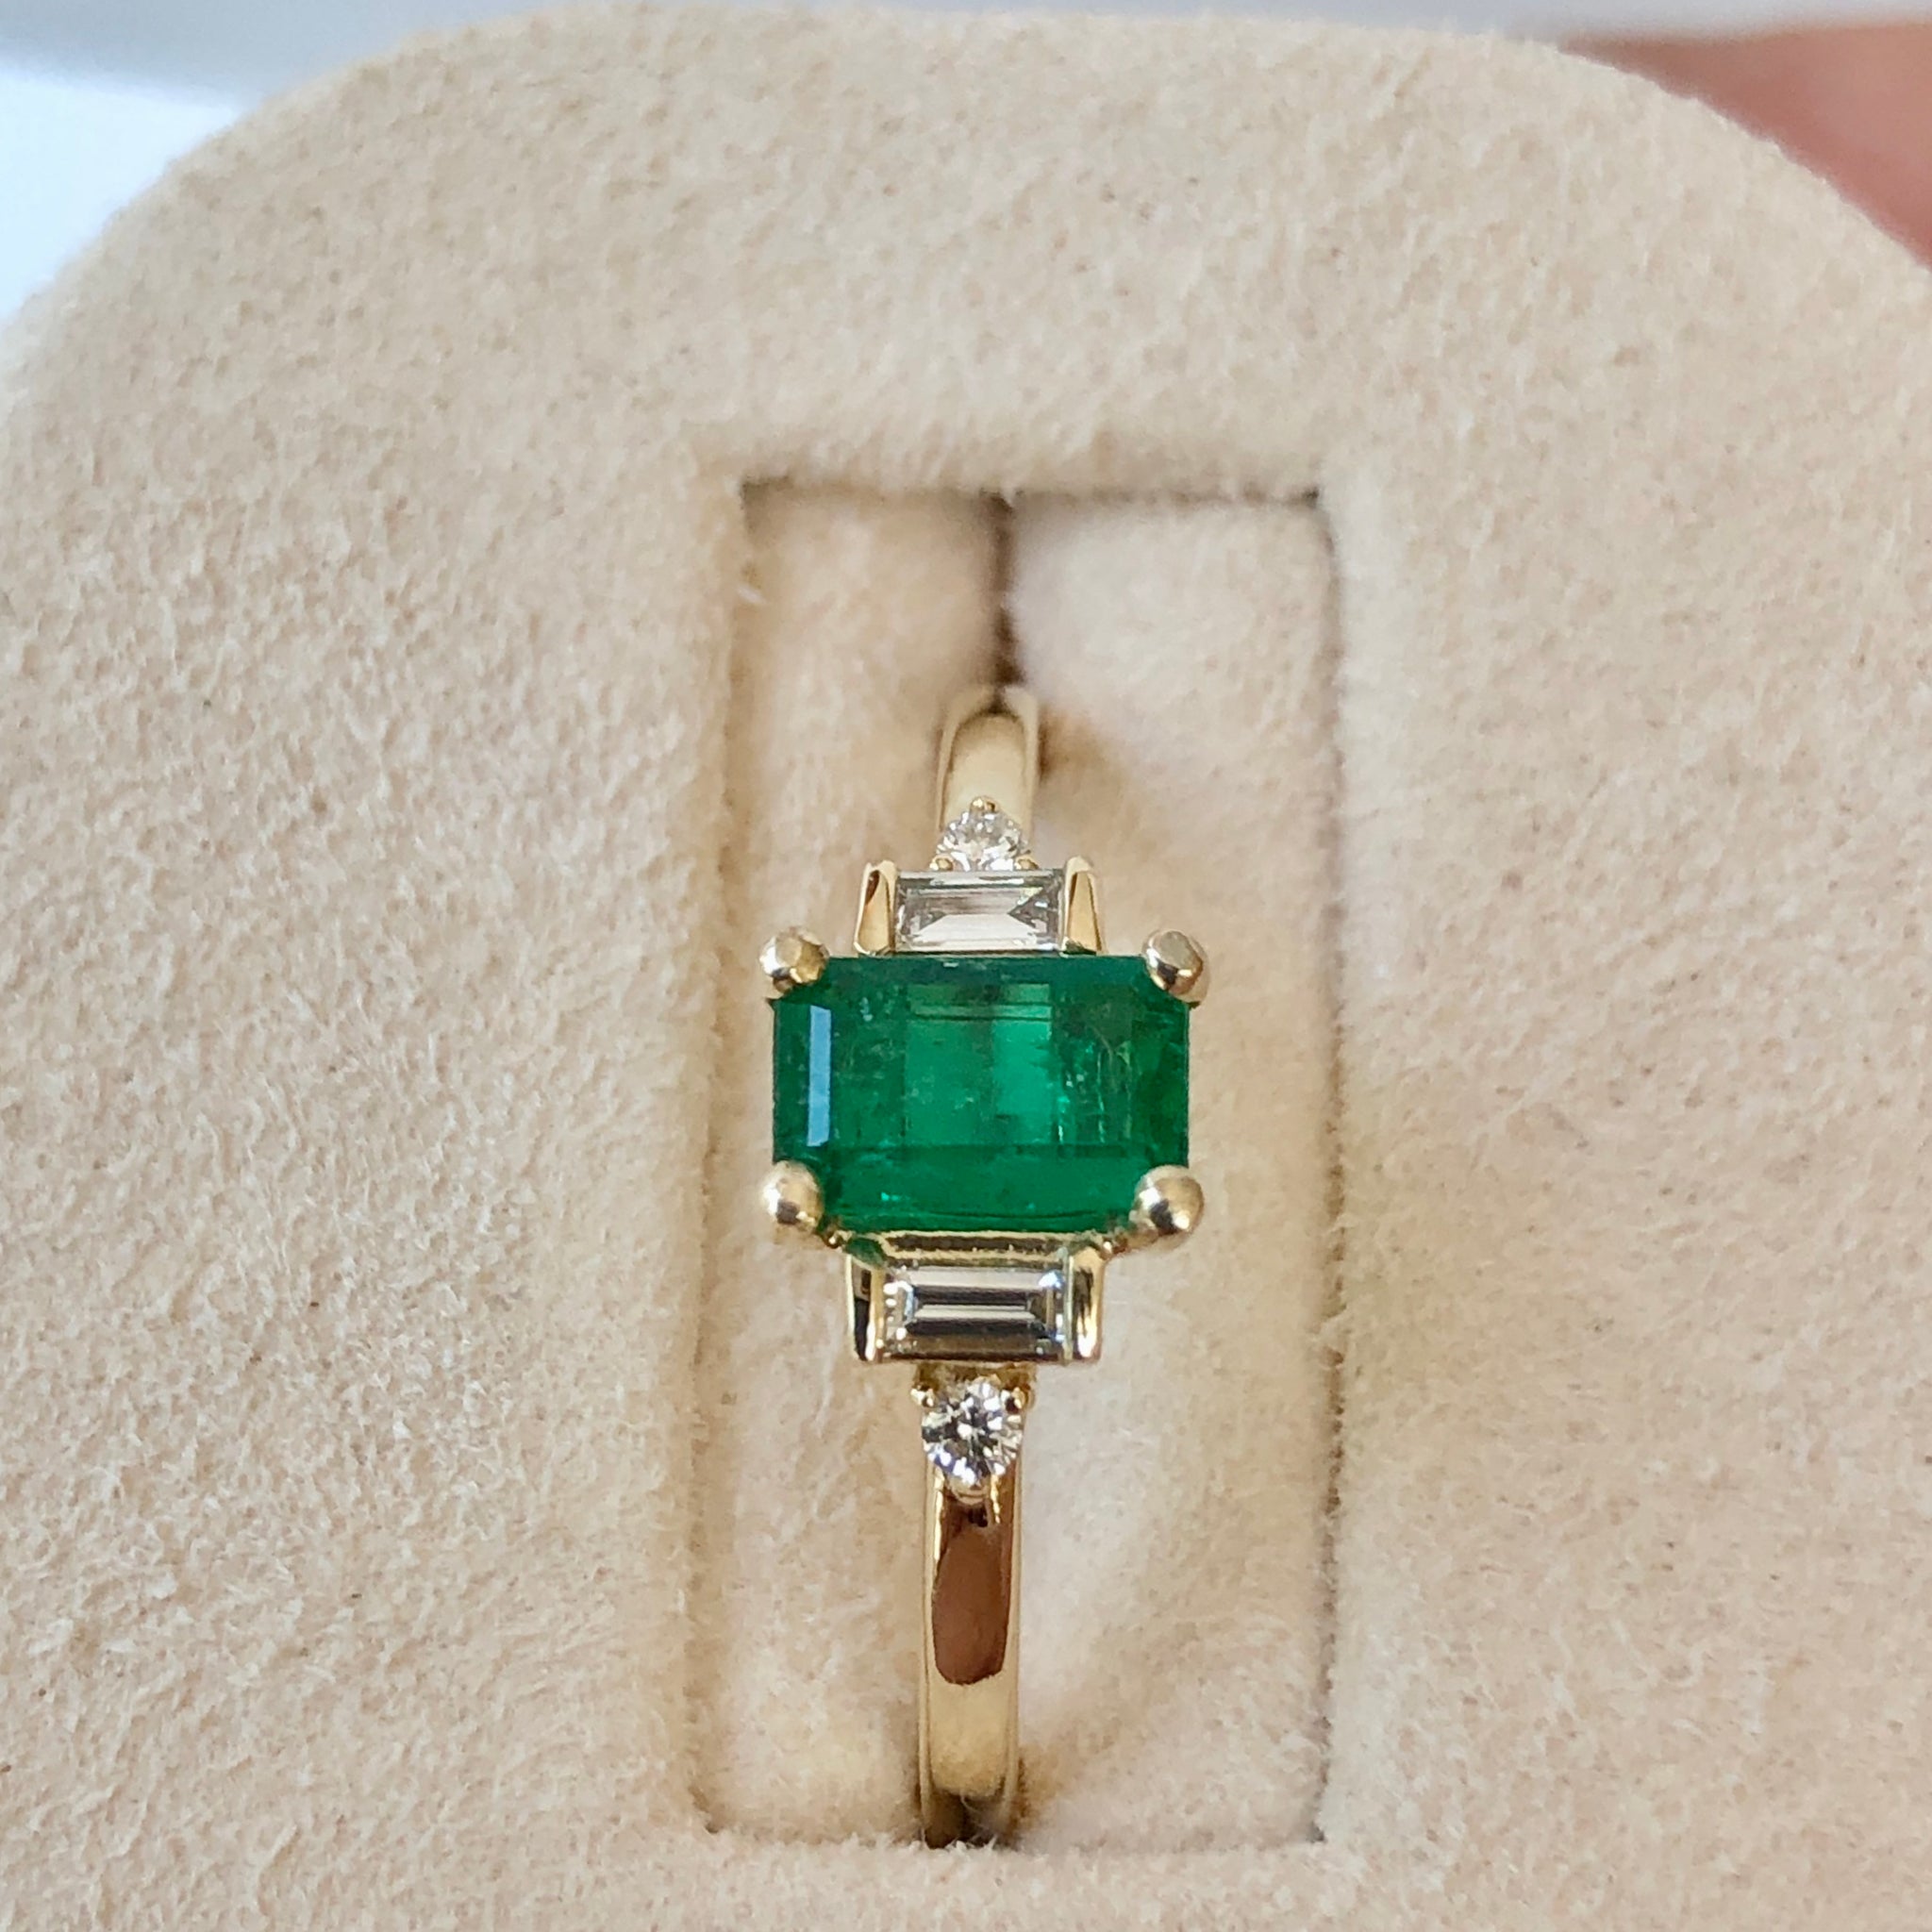 Rectangular Cut Emerald and Diamond Ring Gold